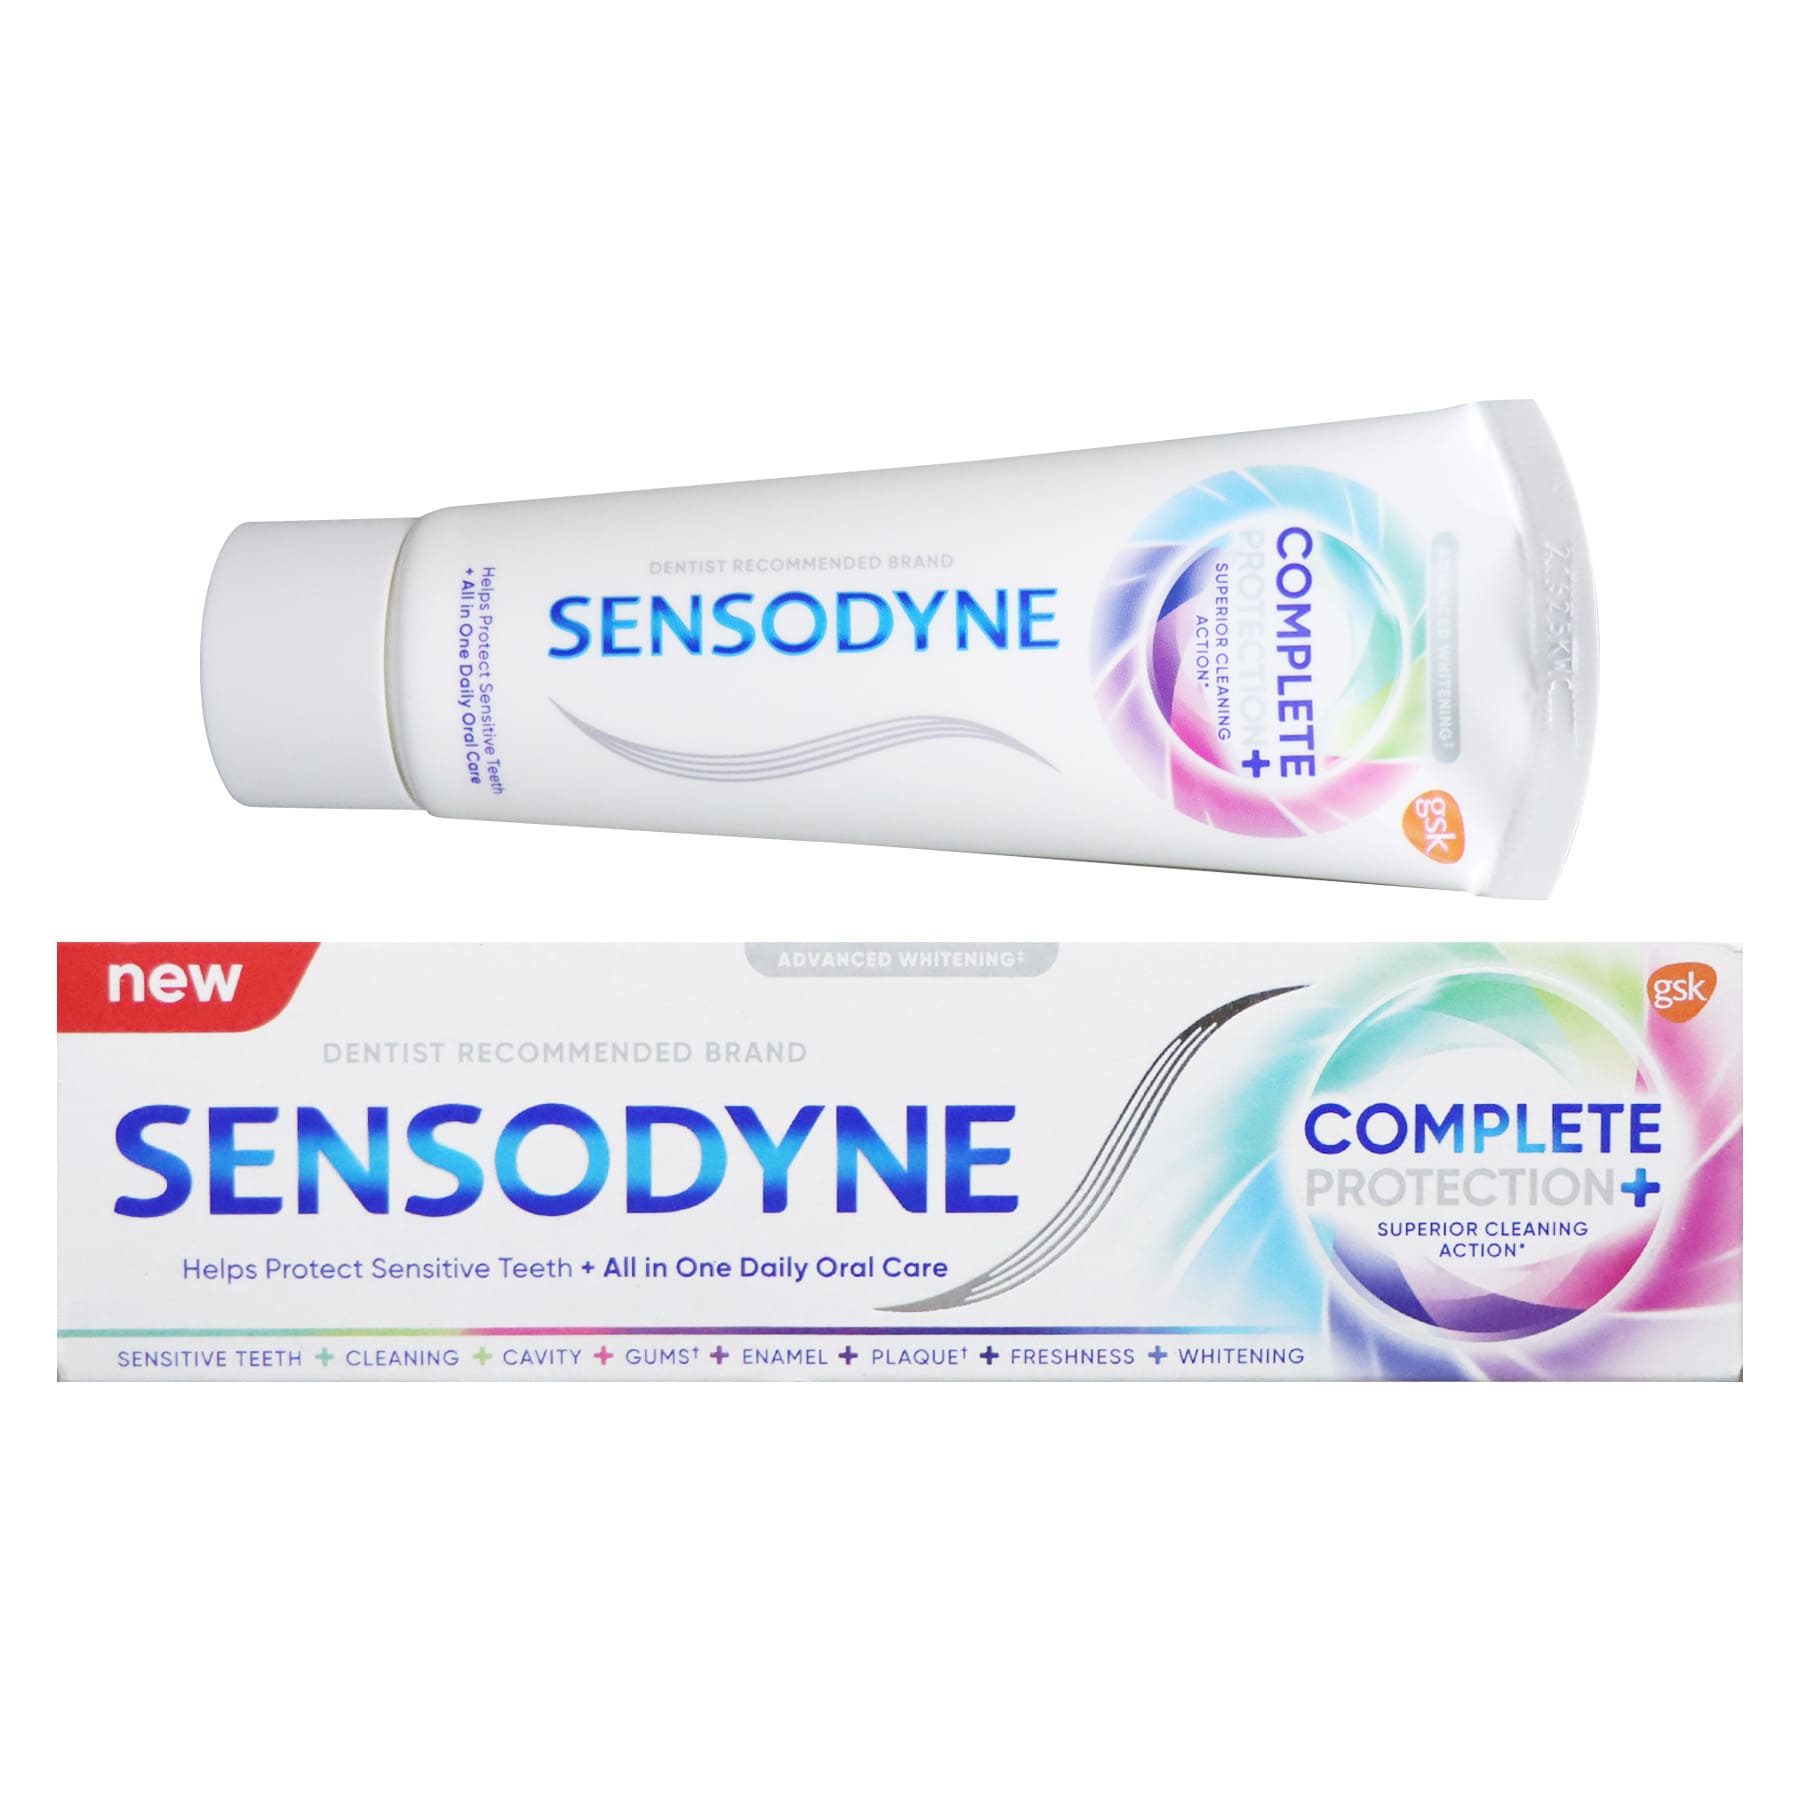 Sensodyne 舒適達 全方位防護抗敏牙膏 75毫升 (美白配方) x 2